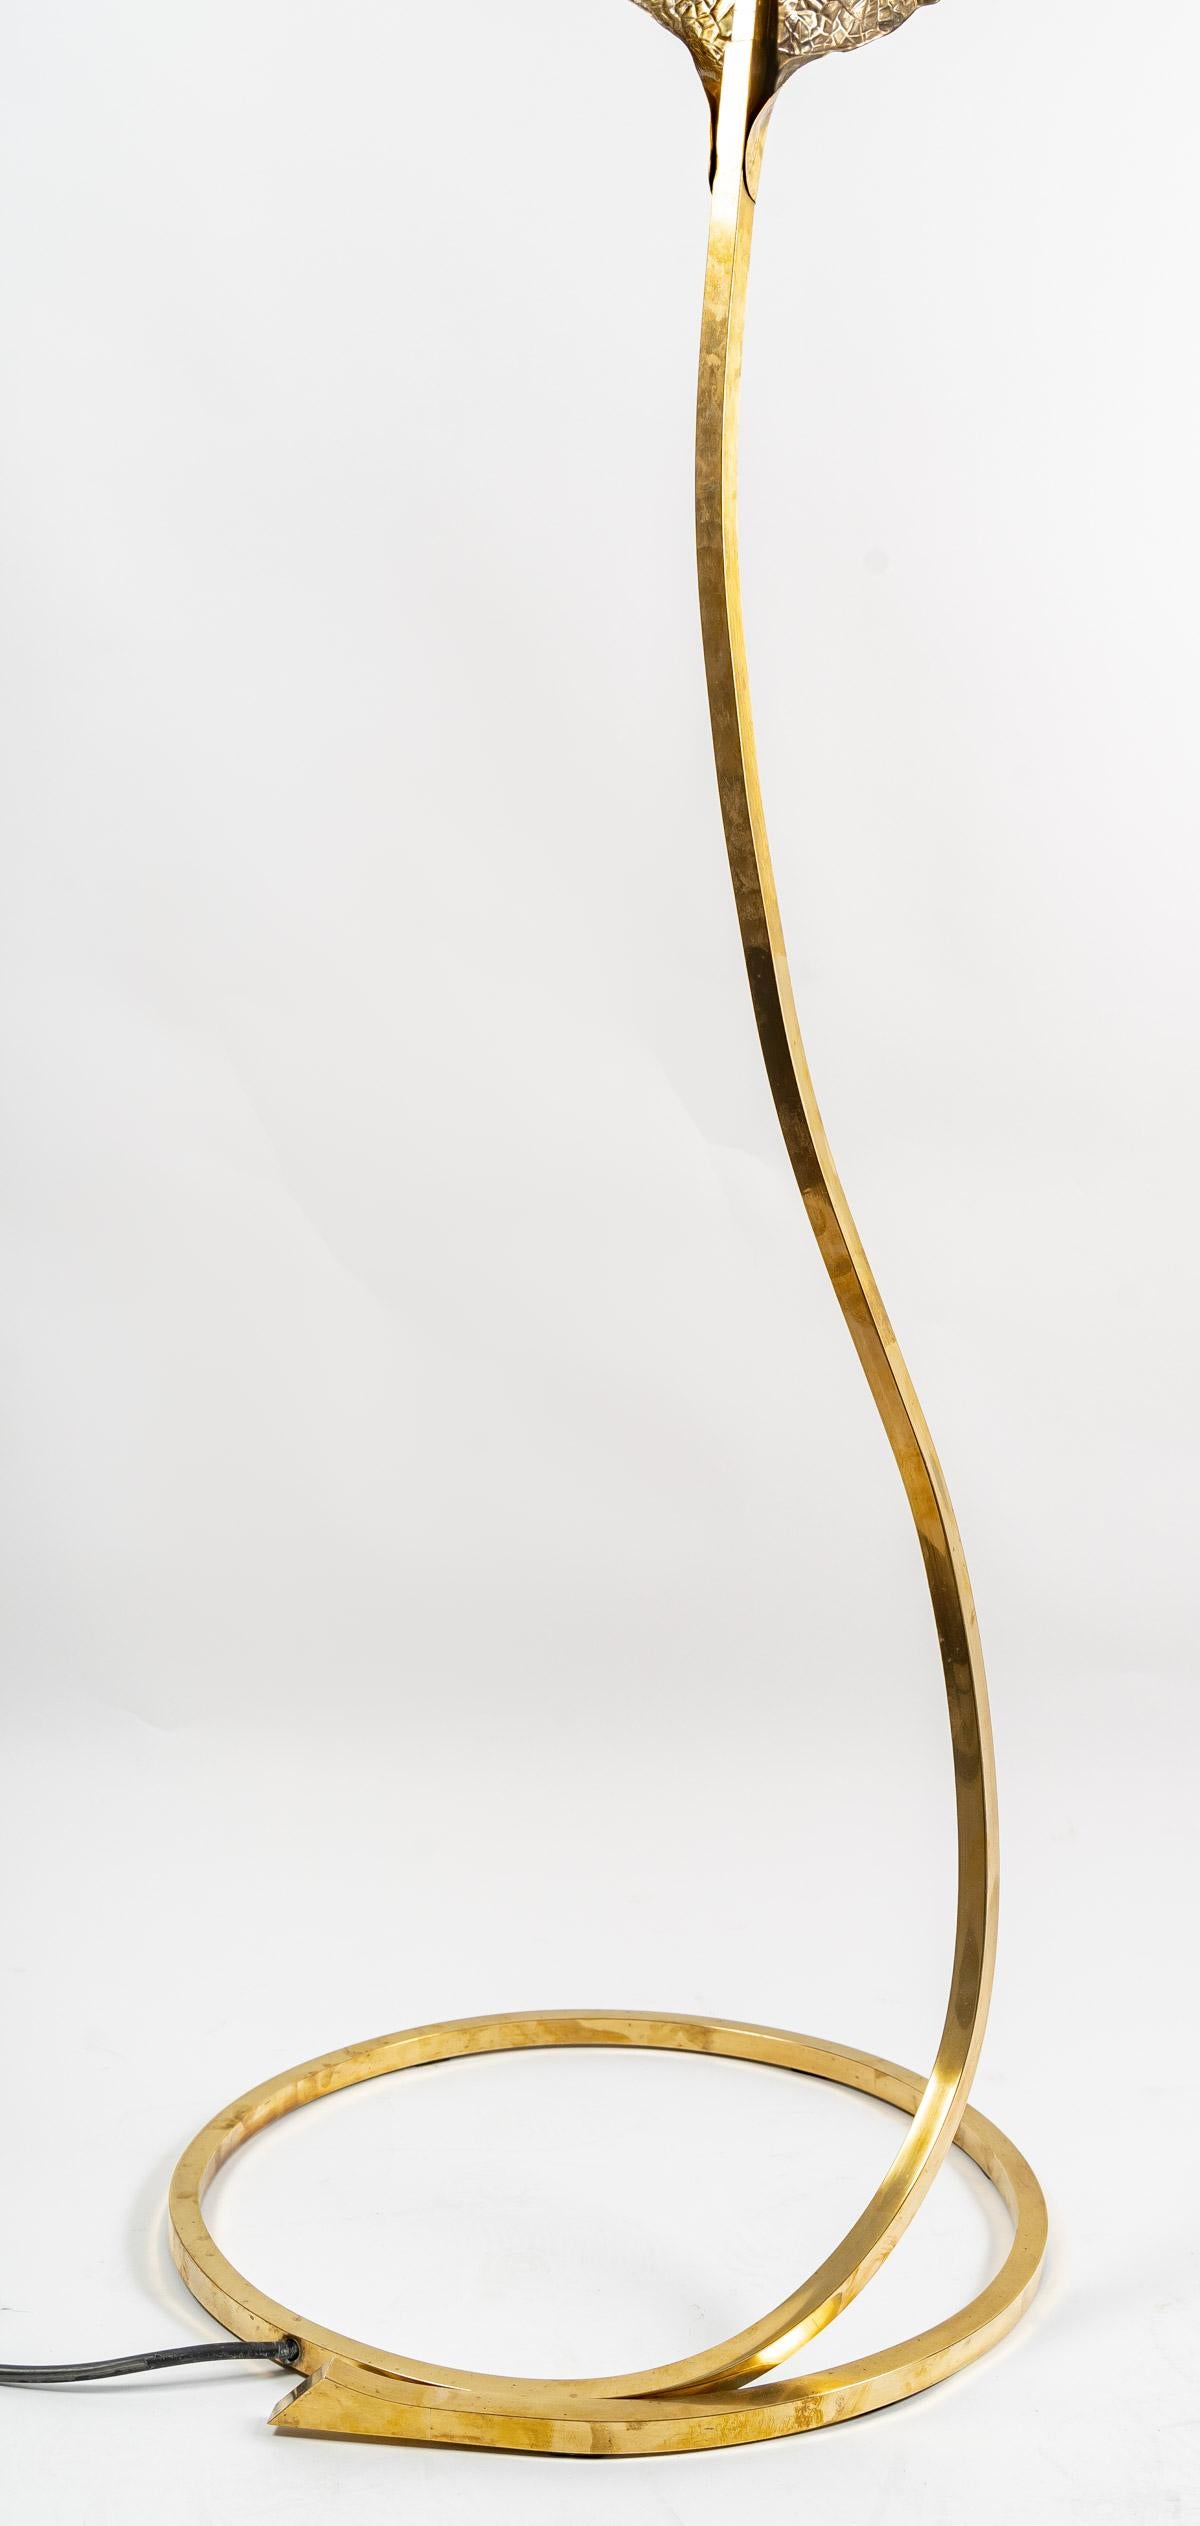 Floor lamp in gilded metal by Tommaso Barbi
Floor lamp in gilded metal by Tommaso Barbi, Foglio model, 1970s.
Measures: H: 168 cm, W: 50 cm, D: 44 cm.
 